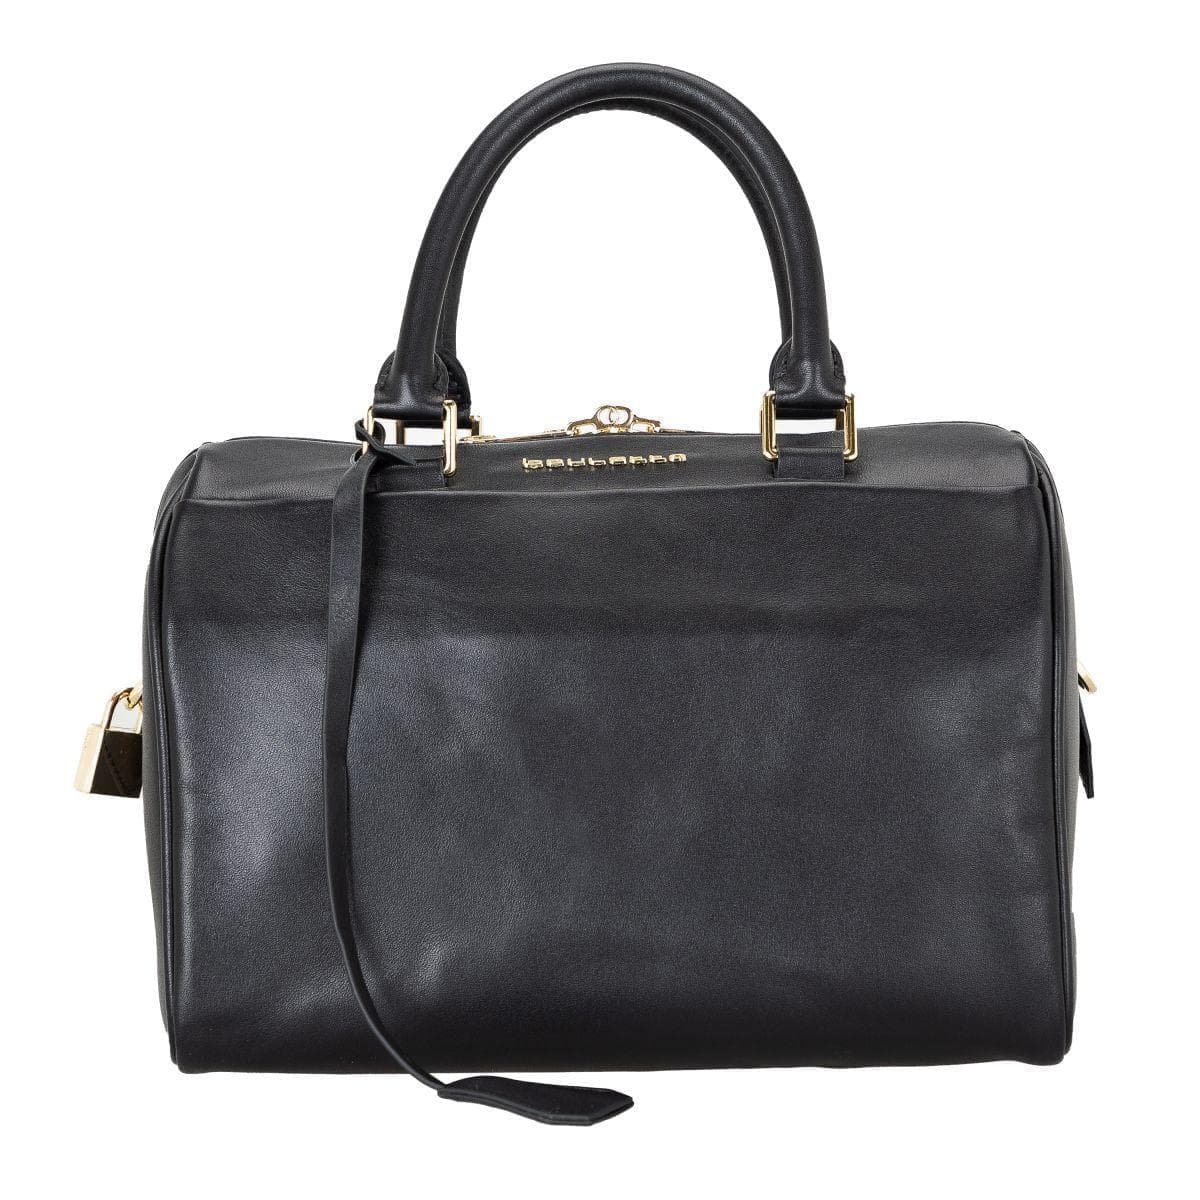 Shine Women's Leather Handbags Black Bouletta Shop